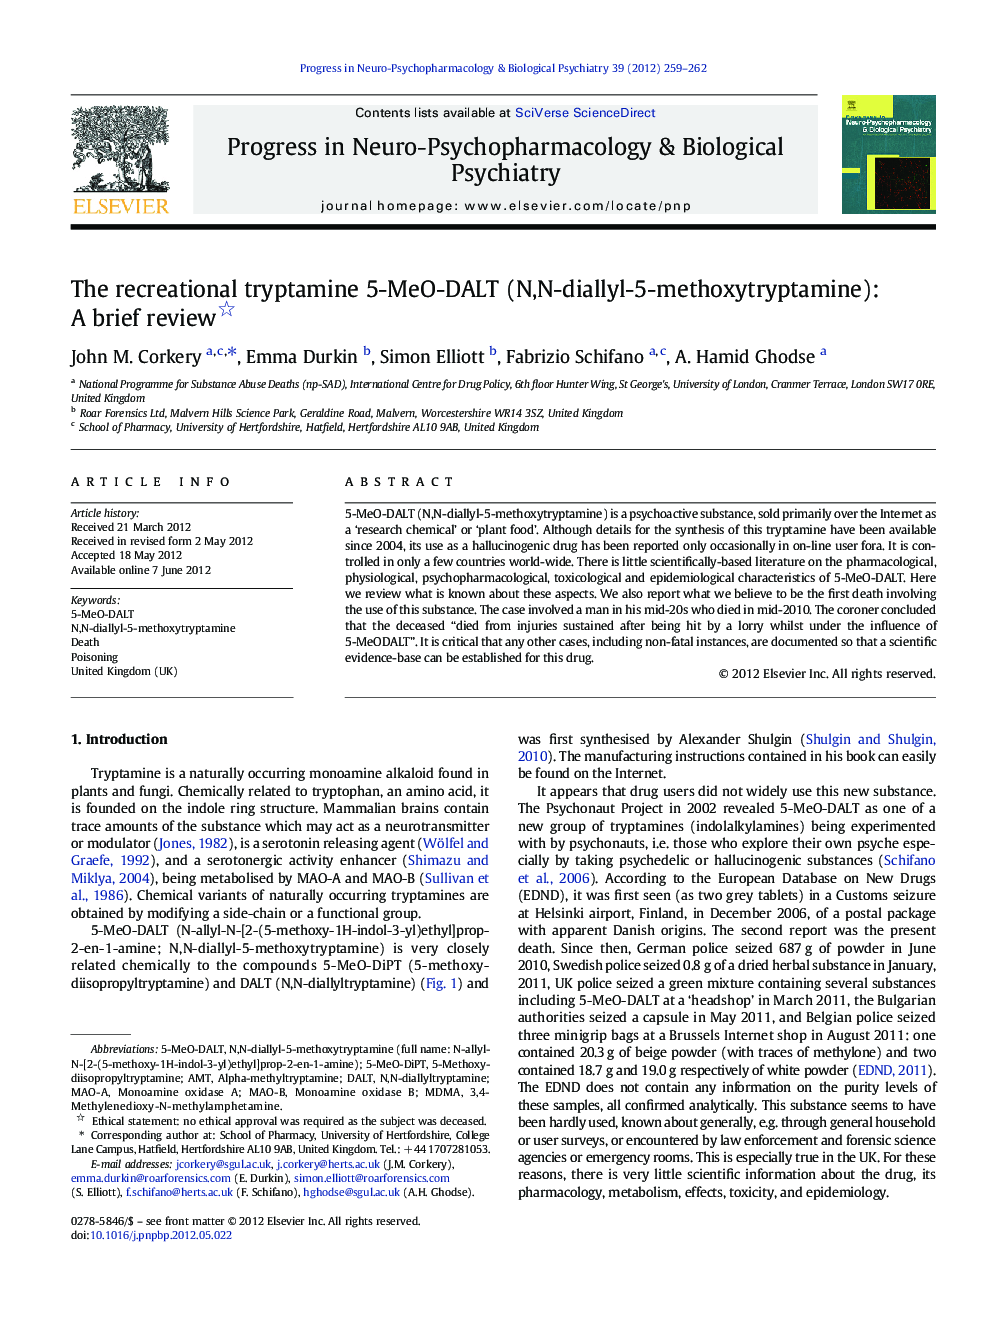 The recreational tryptamine 5-MeO-DALT (N,N-diallyl-5-methoxytryptamine): A brief review